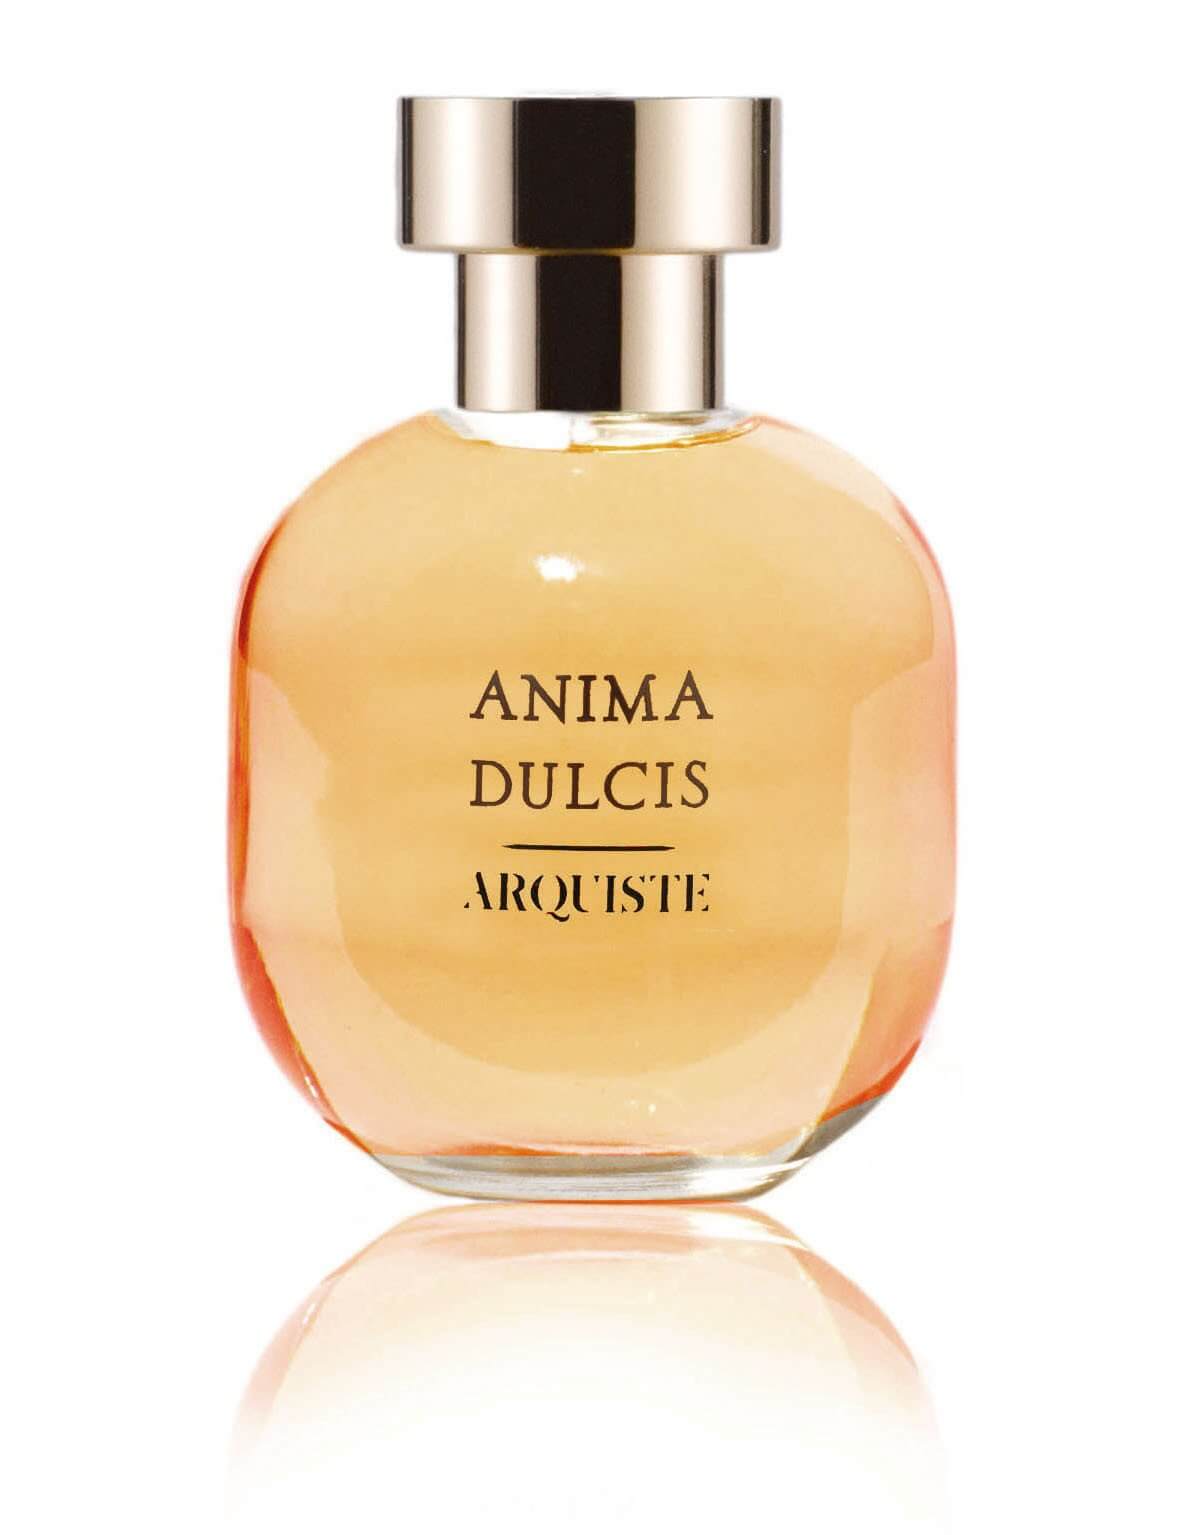 Anima Dulcis by Arquiste at Indigo